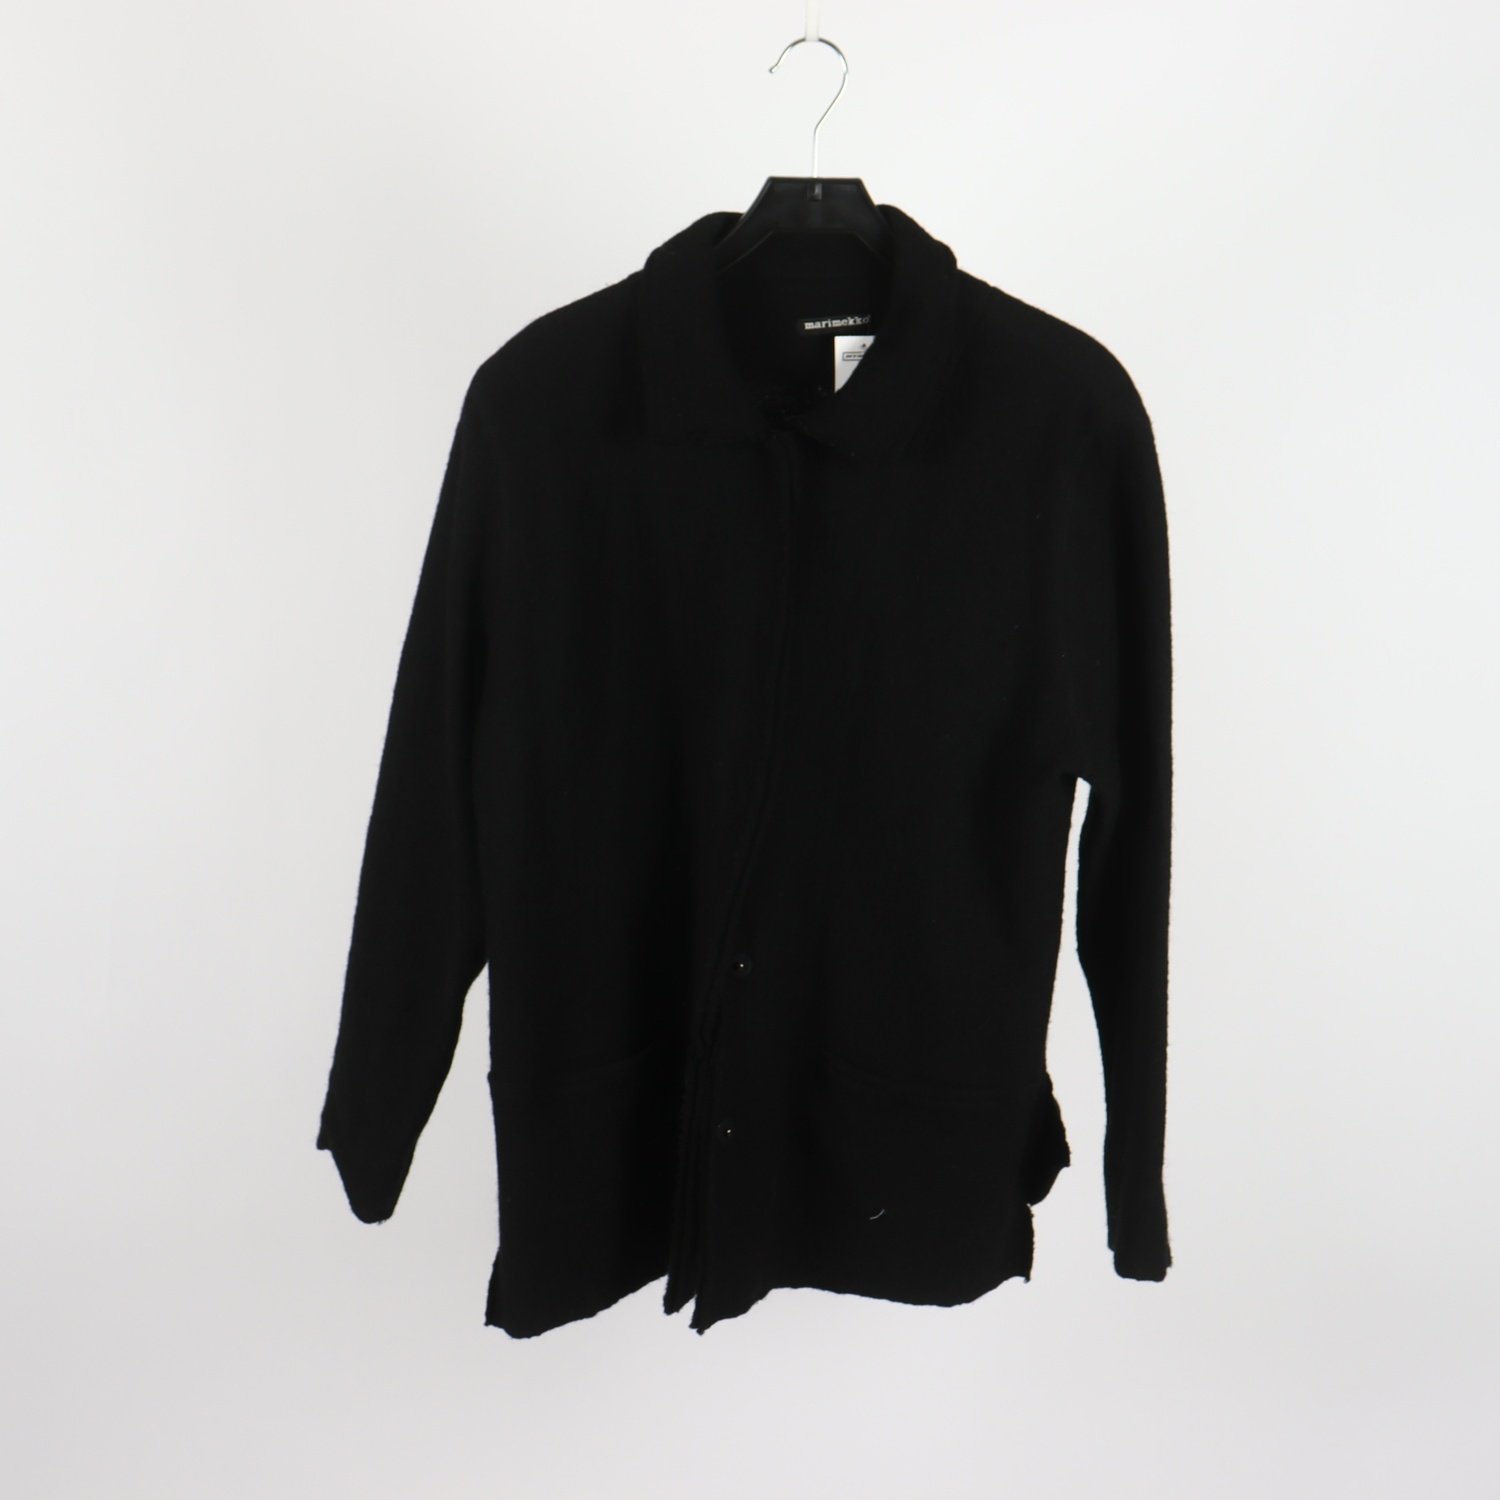 Jacka/tröja, Marimekko, svart, 100% ull, stl. L